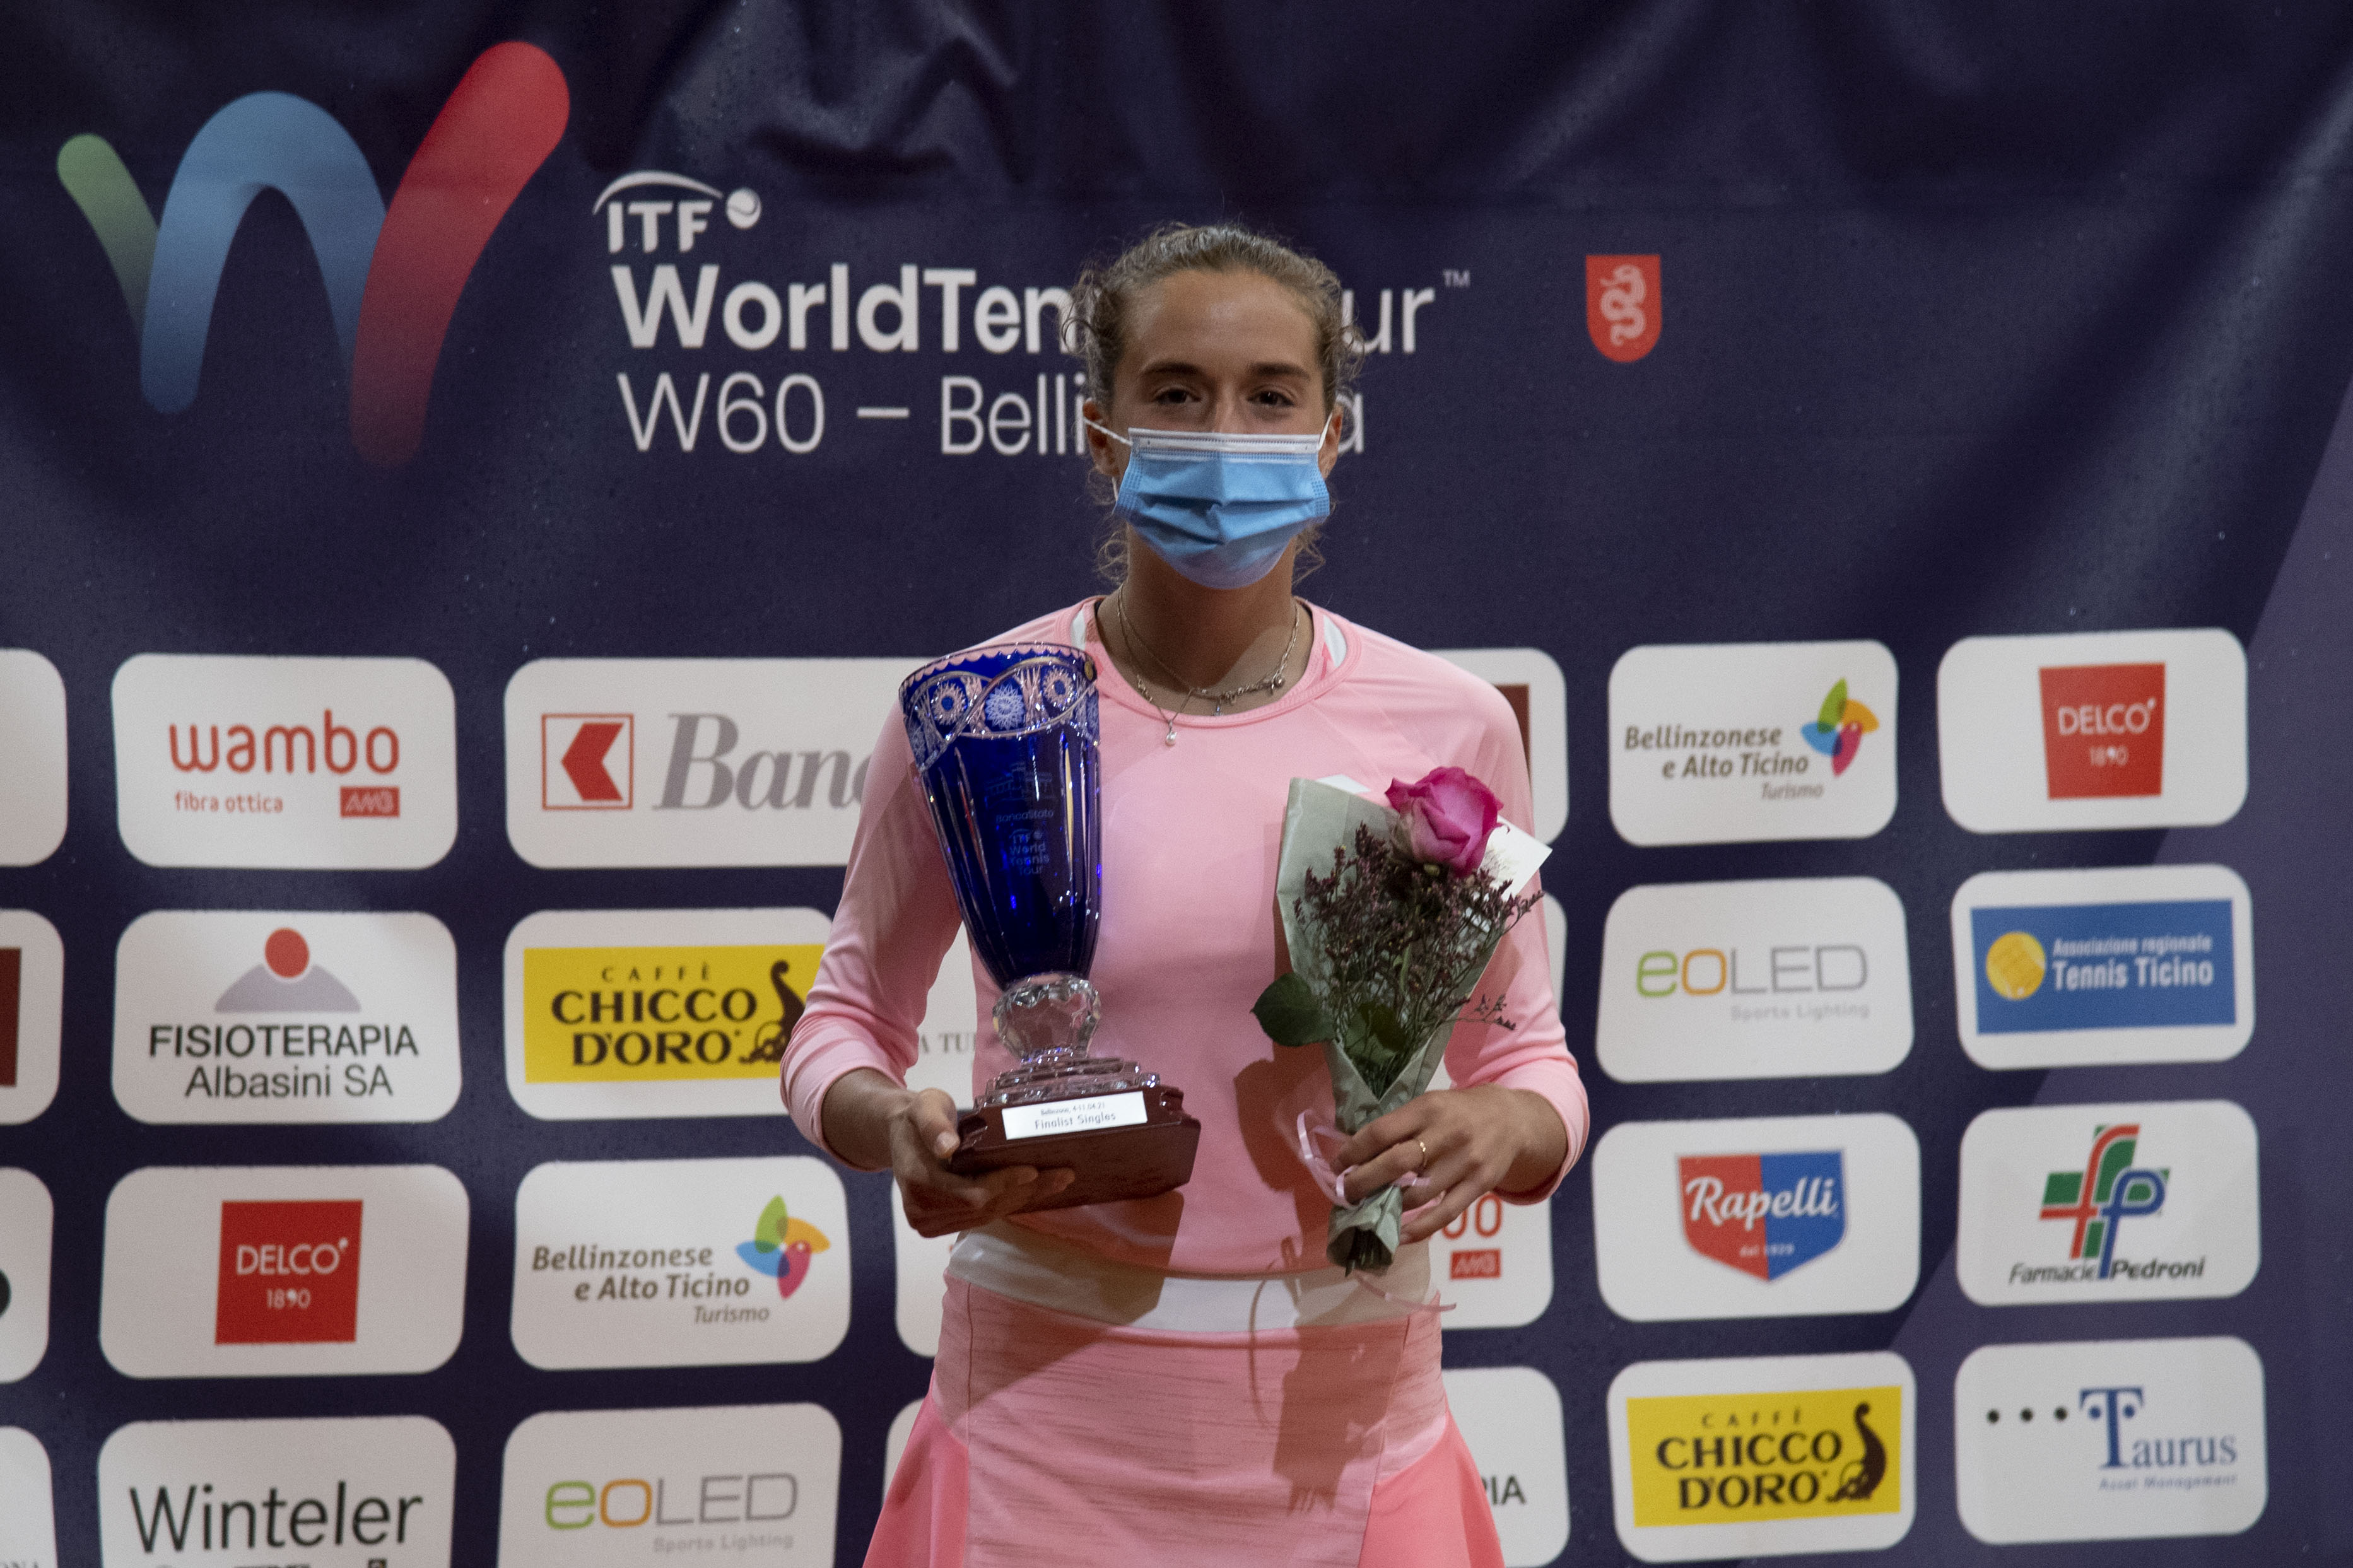 2021.04.11-ITF-WorldTennisTour-Final-Lucia-Bronzetti-ITA-Second-Place-03